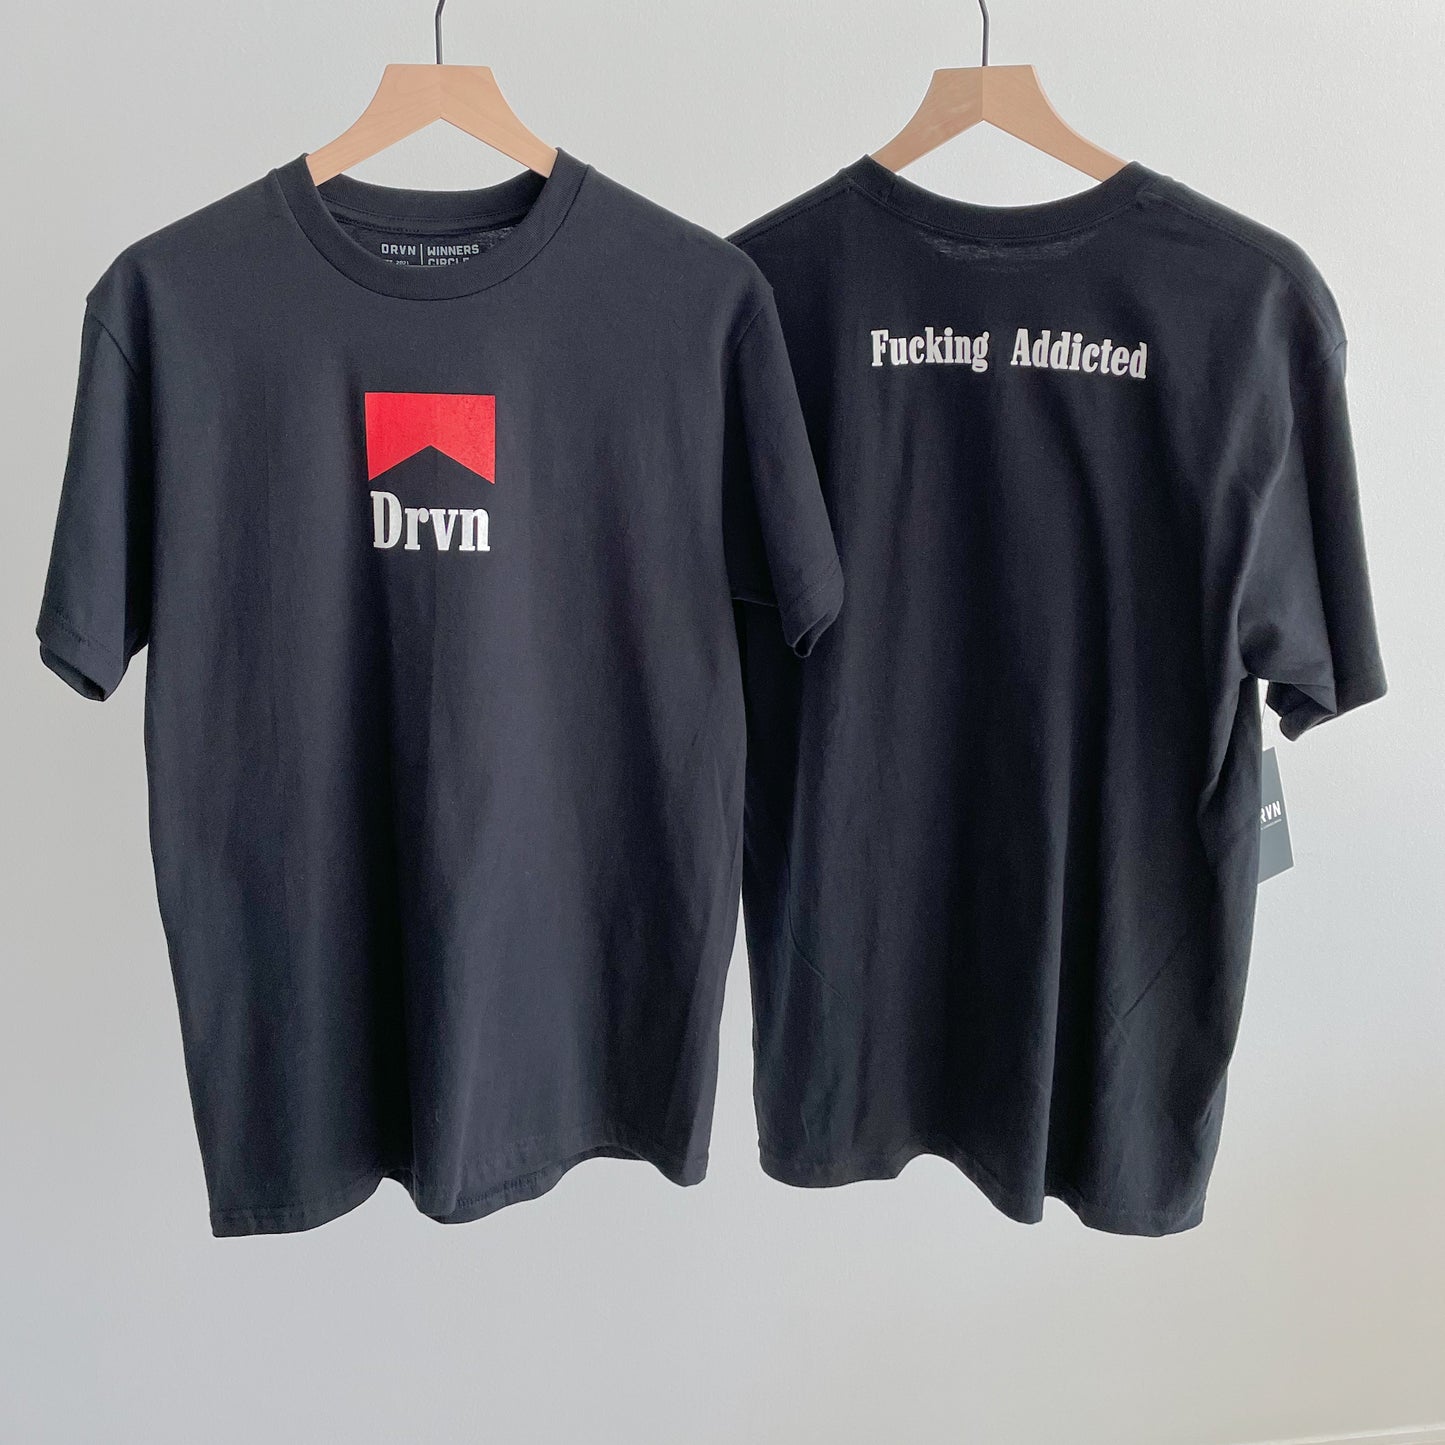 Fucking Addicted T-Shirt